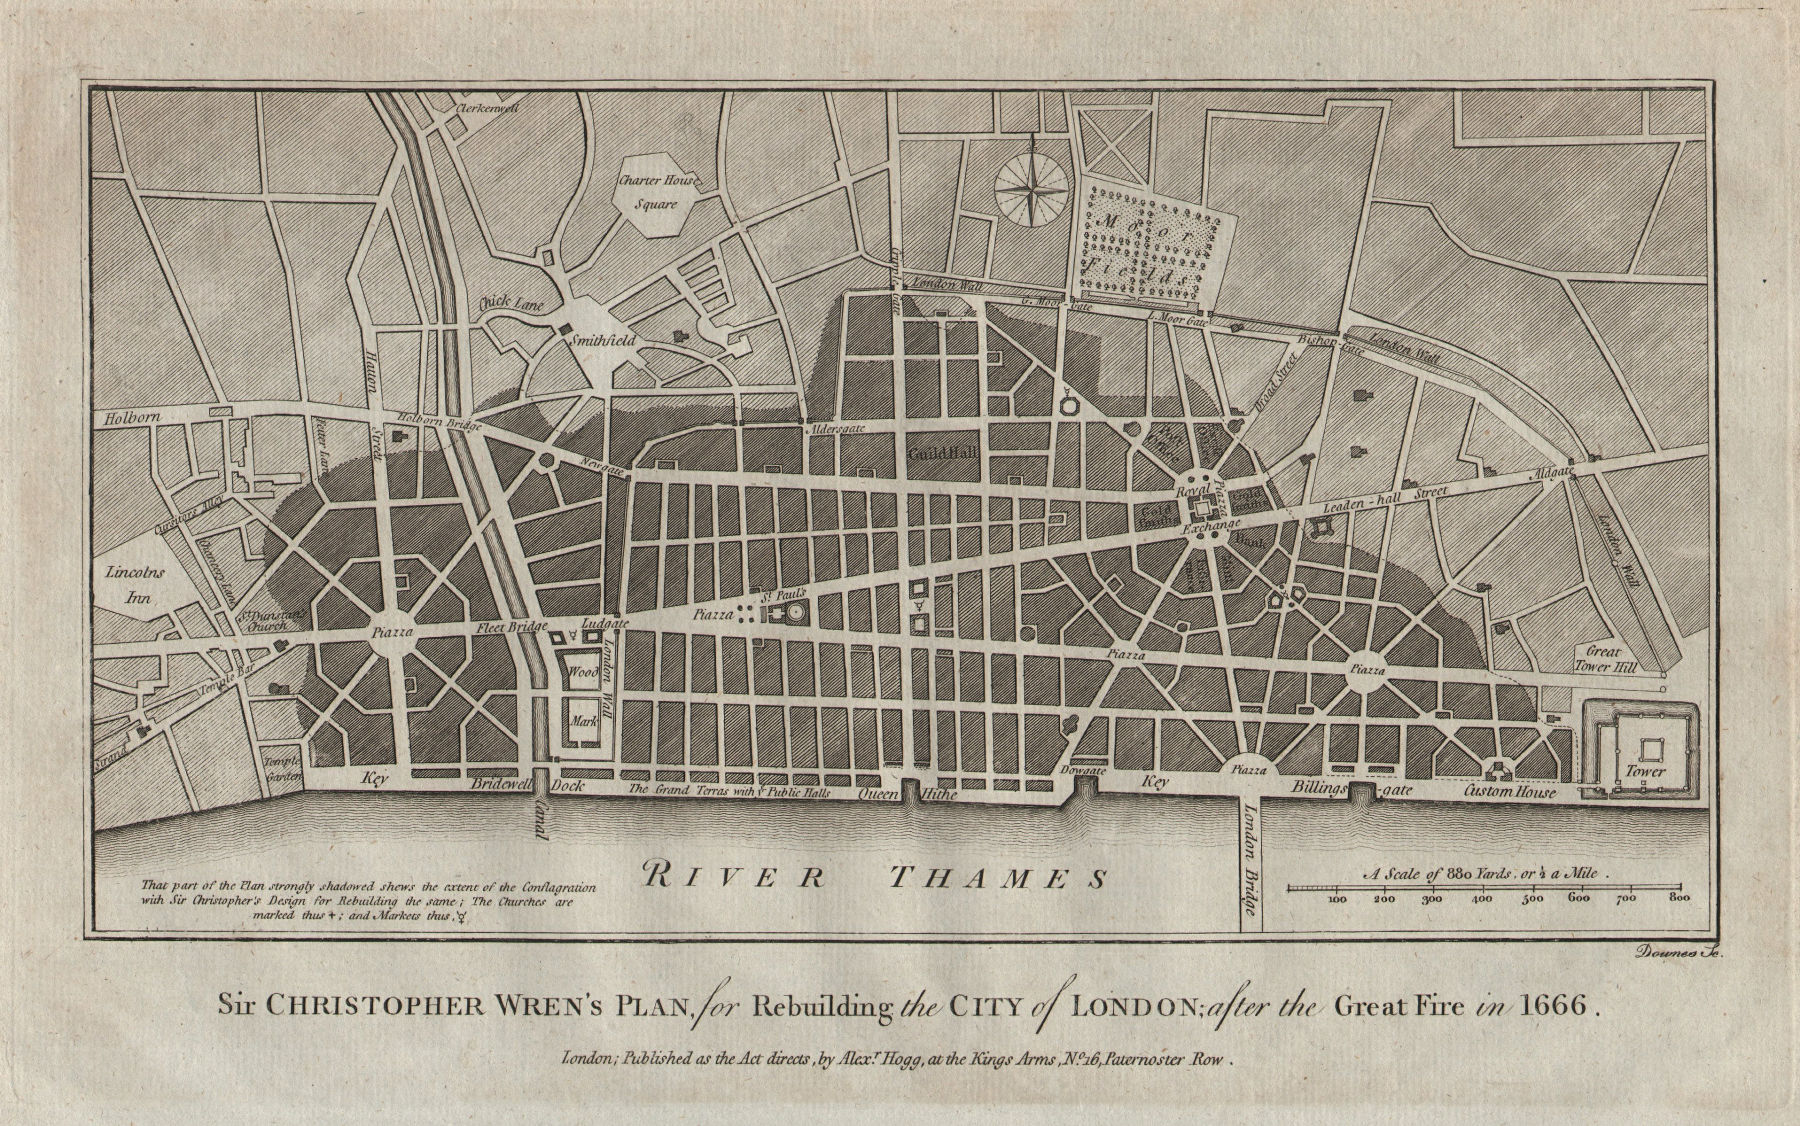 Sir Christopher Wren's plan to rebuild the City of London. THORNTON 1784 map